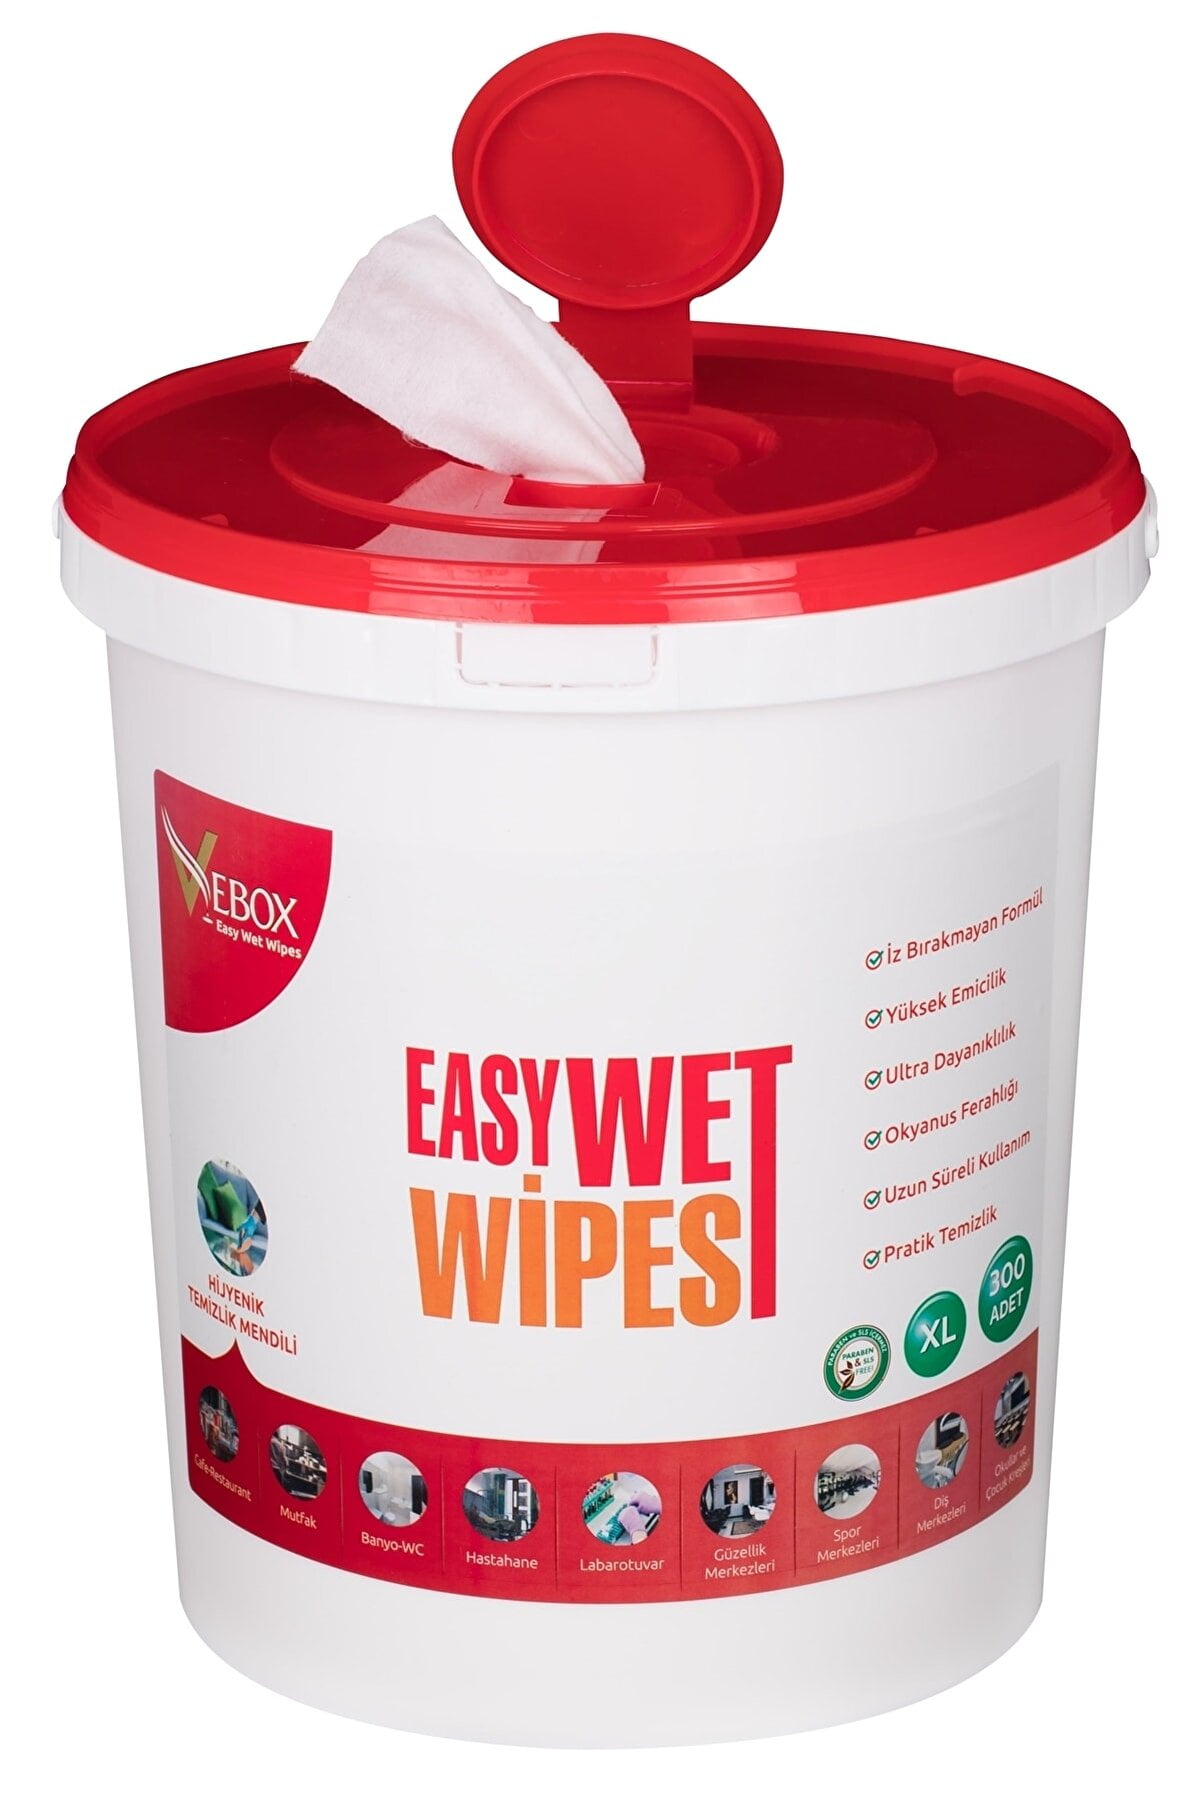 vebox-easy-wet-wipes-wet-bucket-wipes